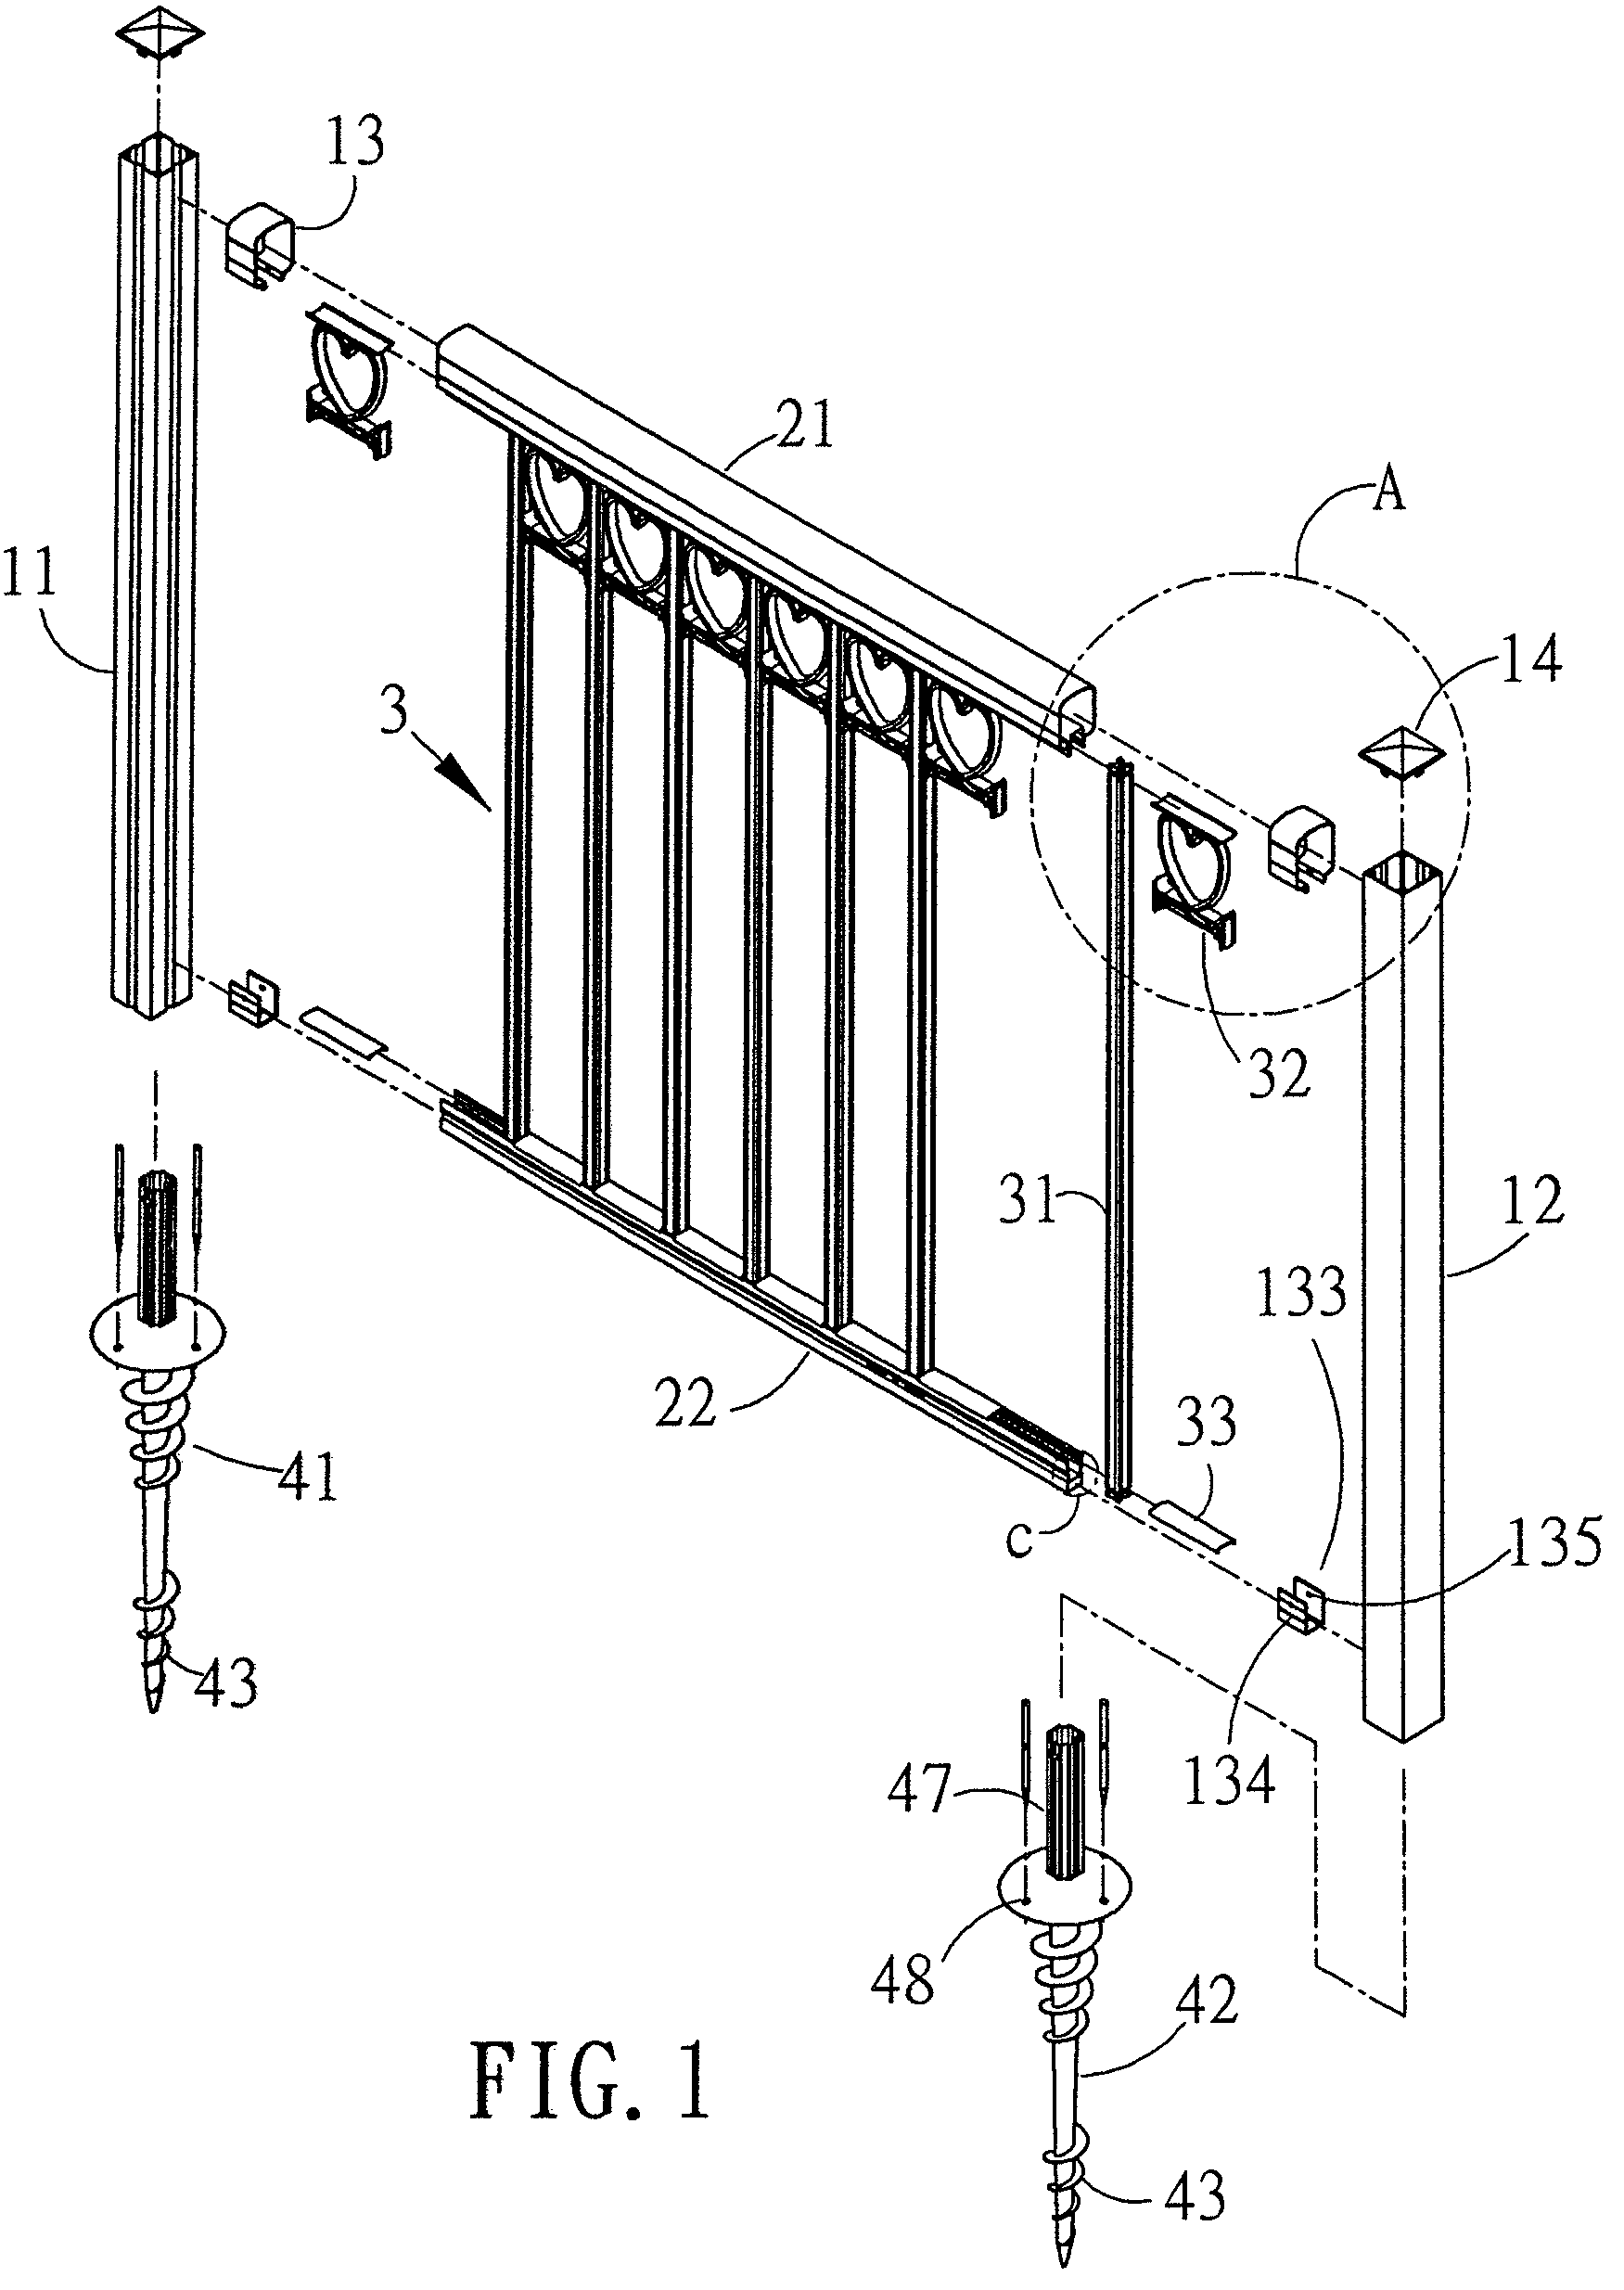 Enclosed fence/railing set